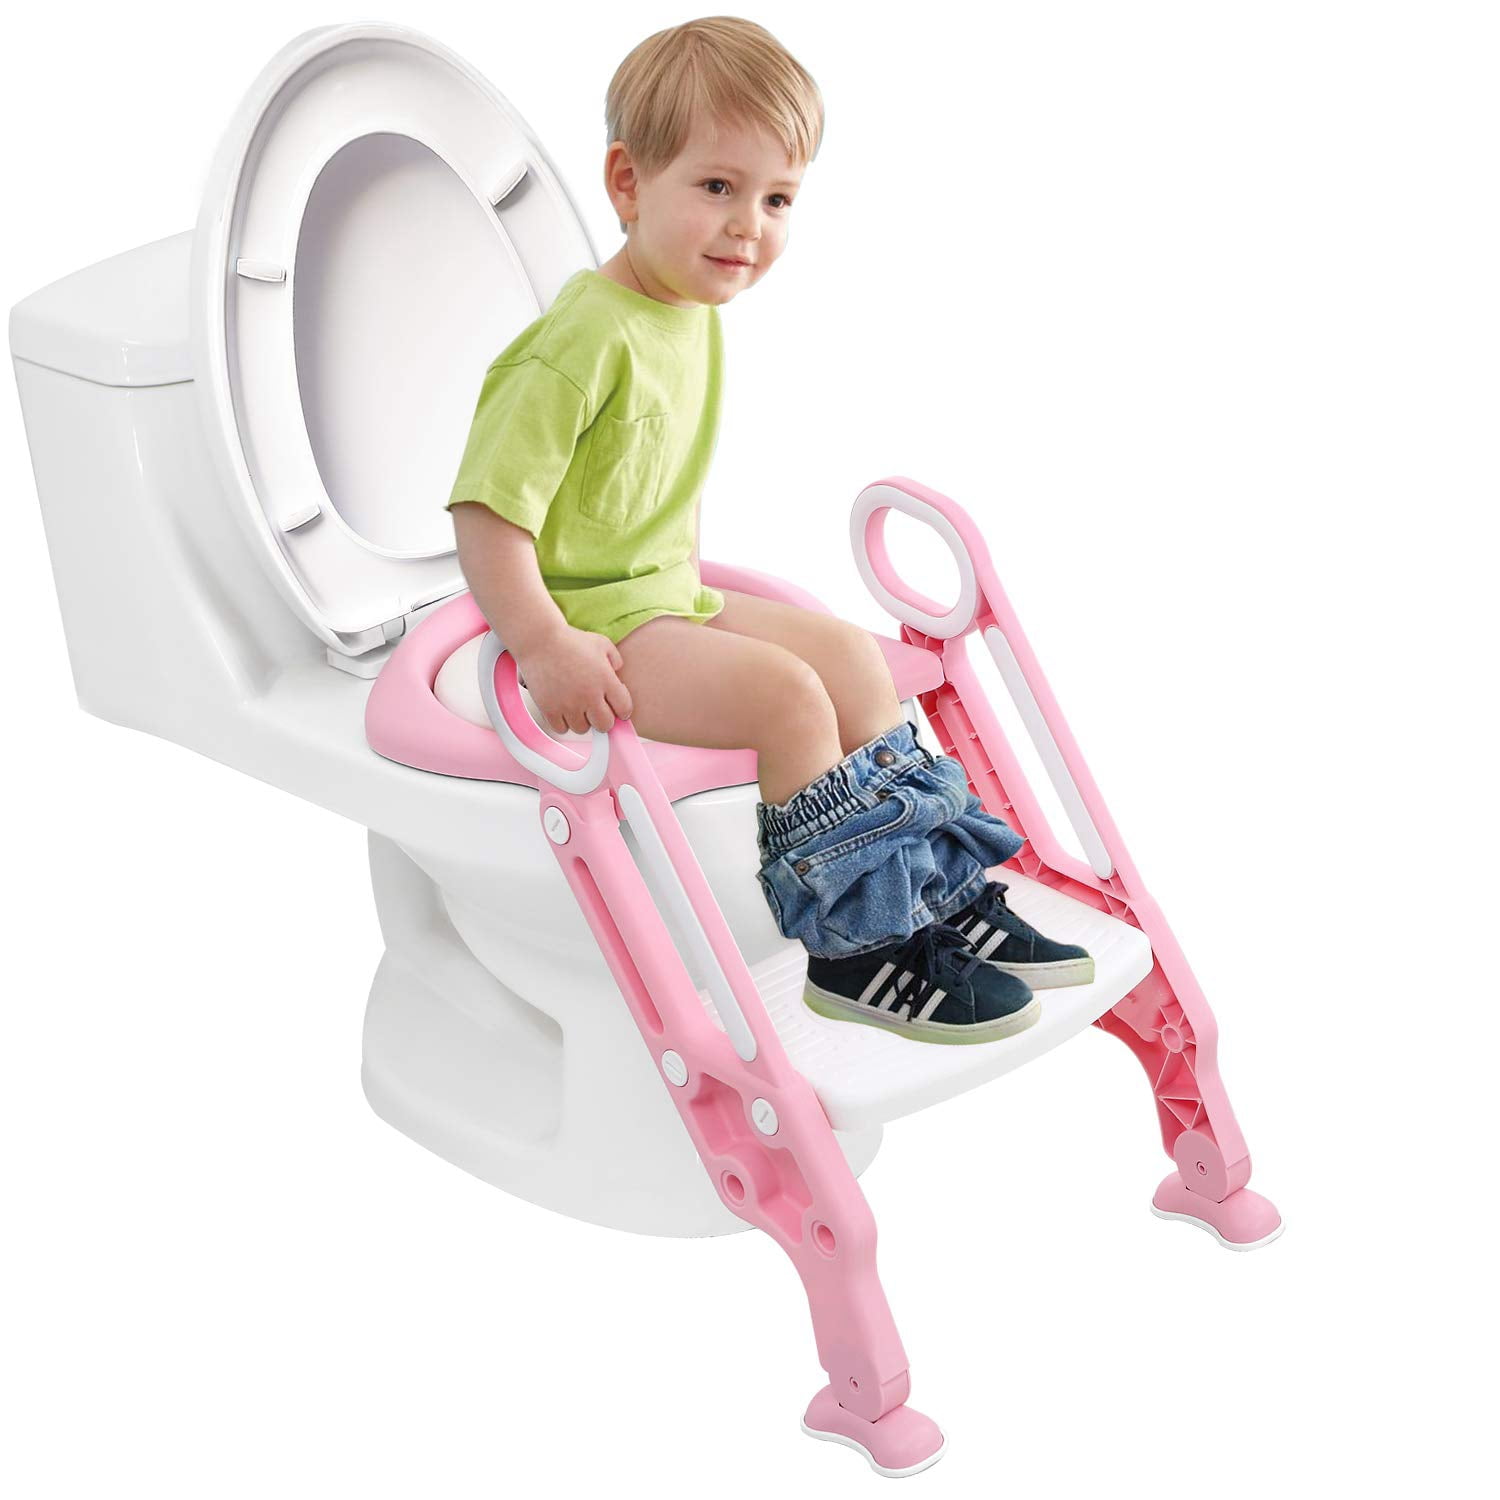 Baby Soft Padded Potty Training Toilet Seat W/ Safety Handles Toddler Kids Child 